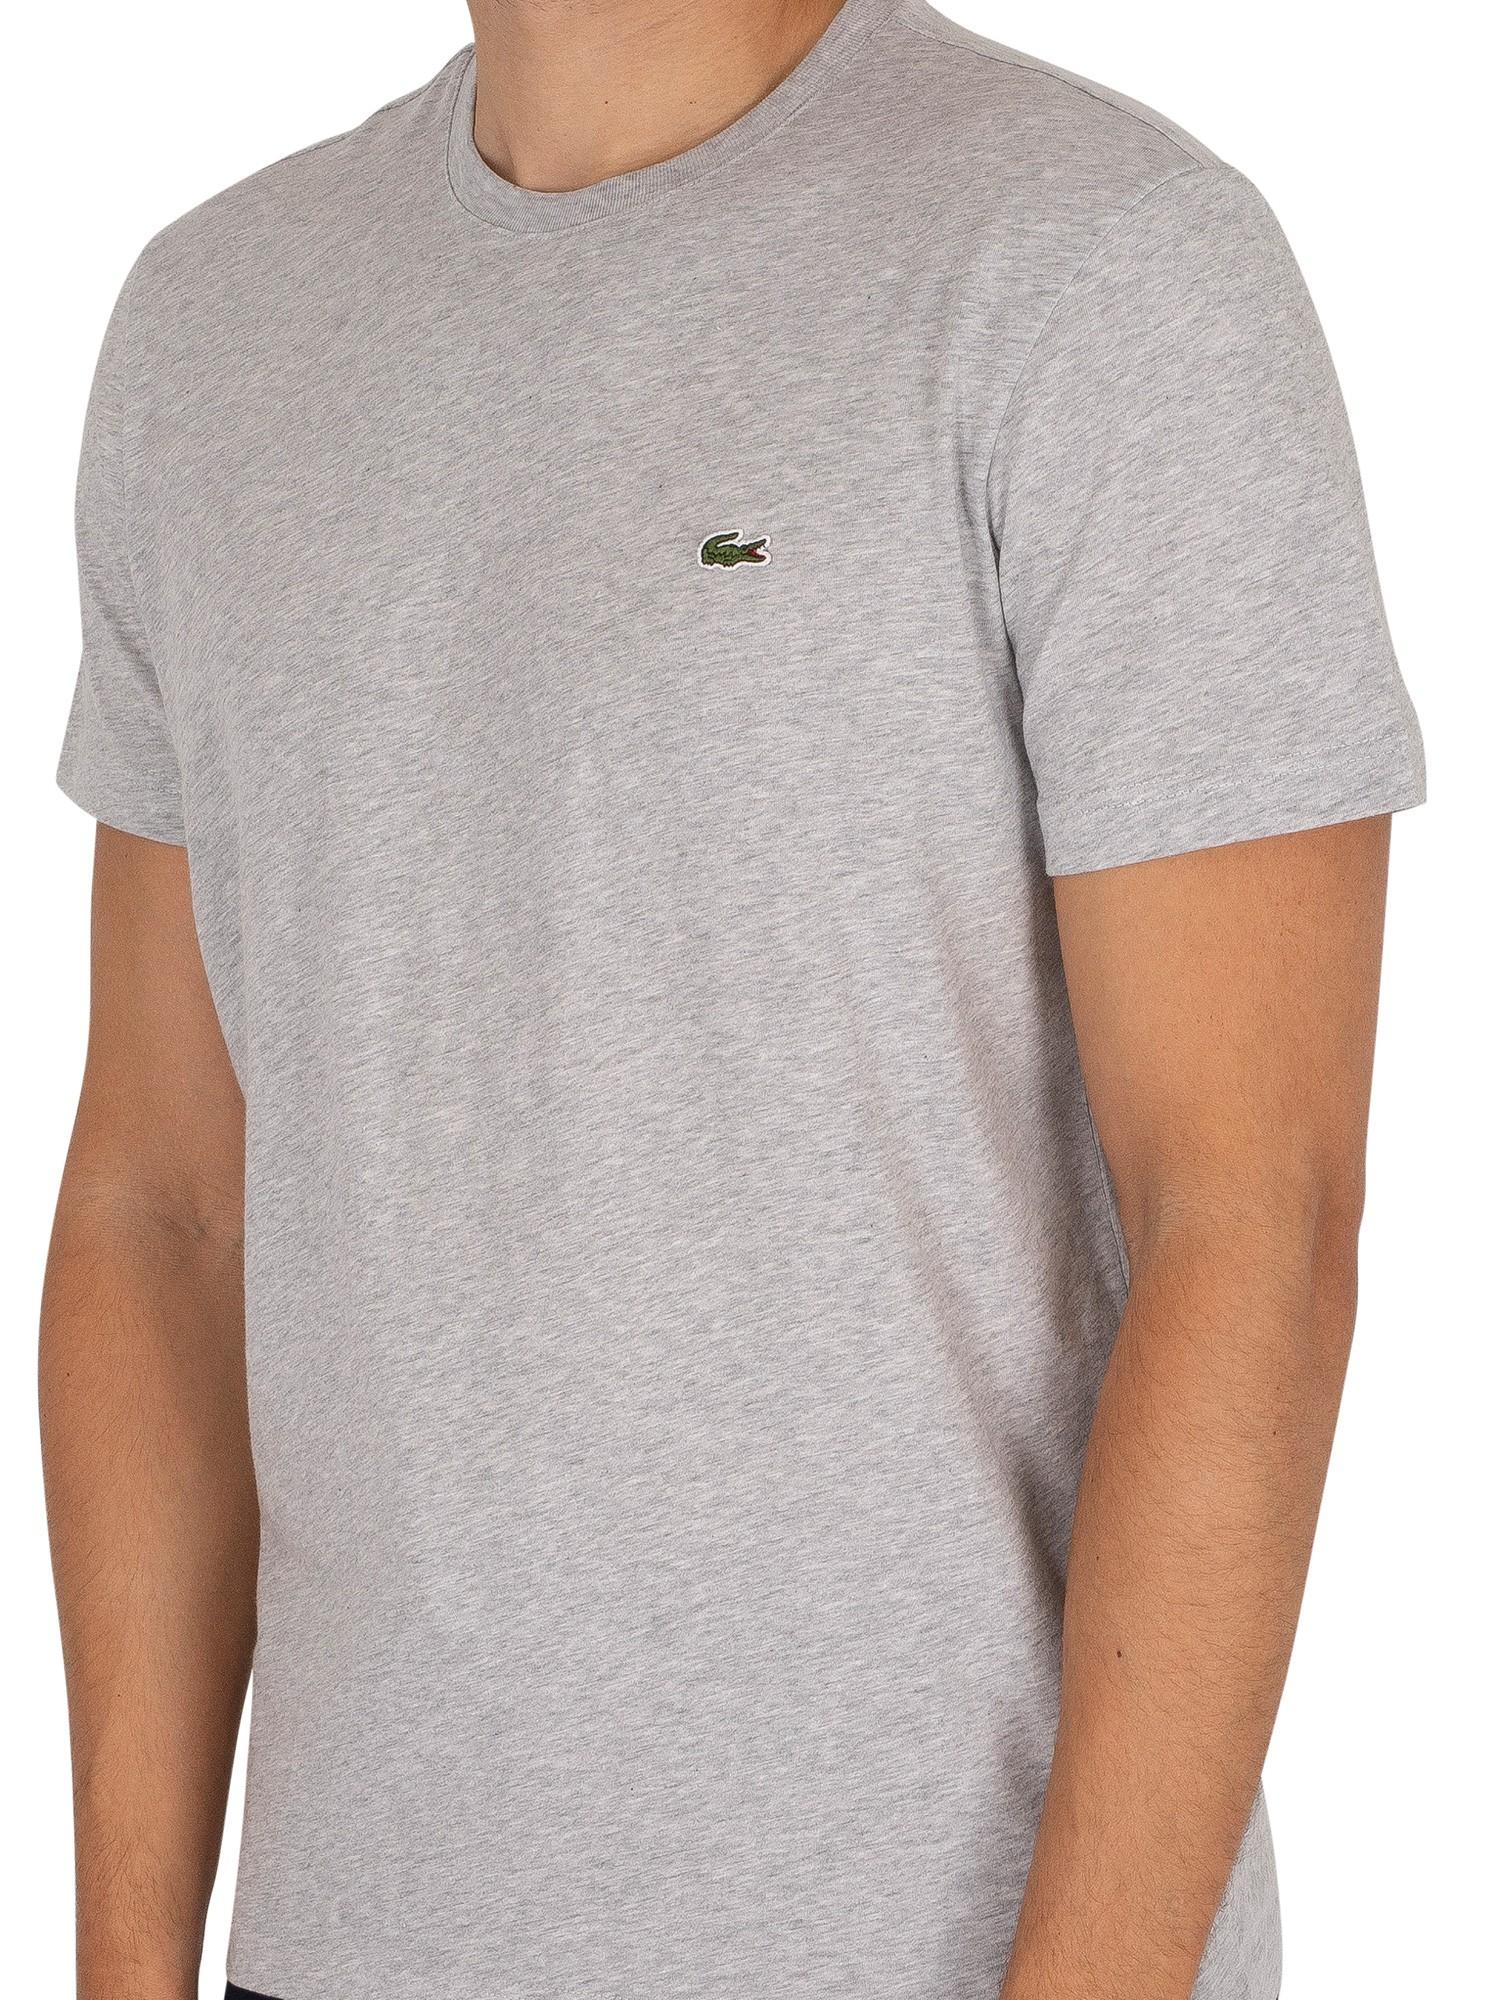 Lacoste Logo T-shirt in Grey Melange (Gray) for Men - Lyst